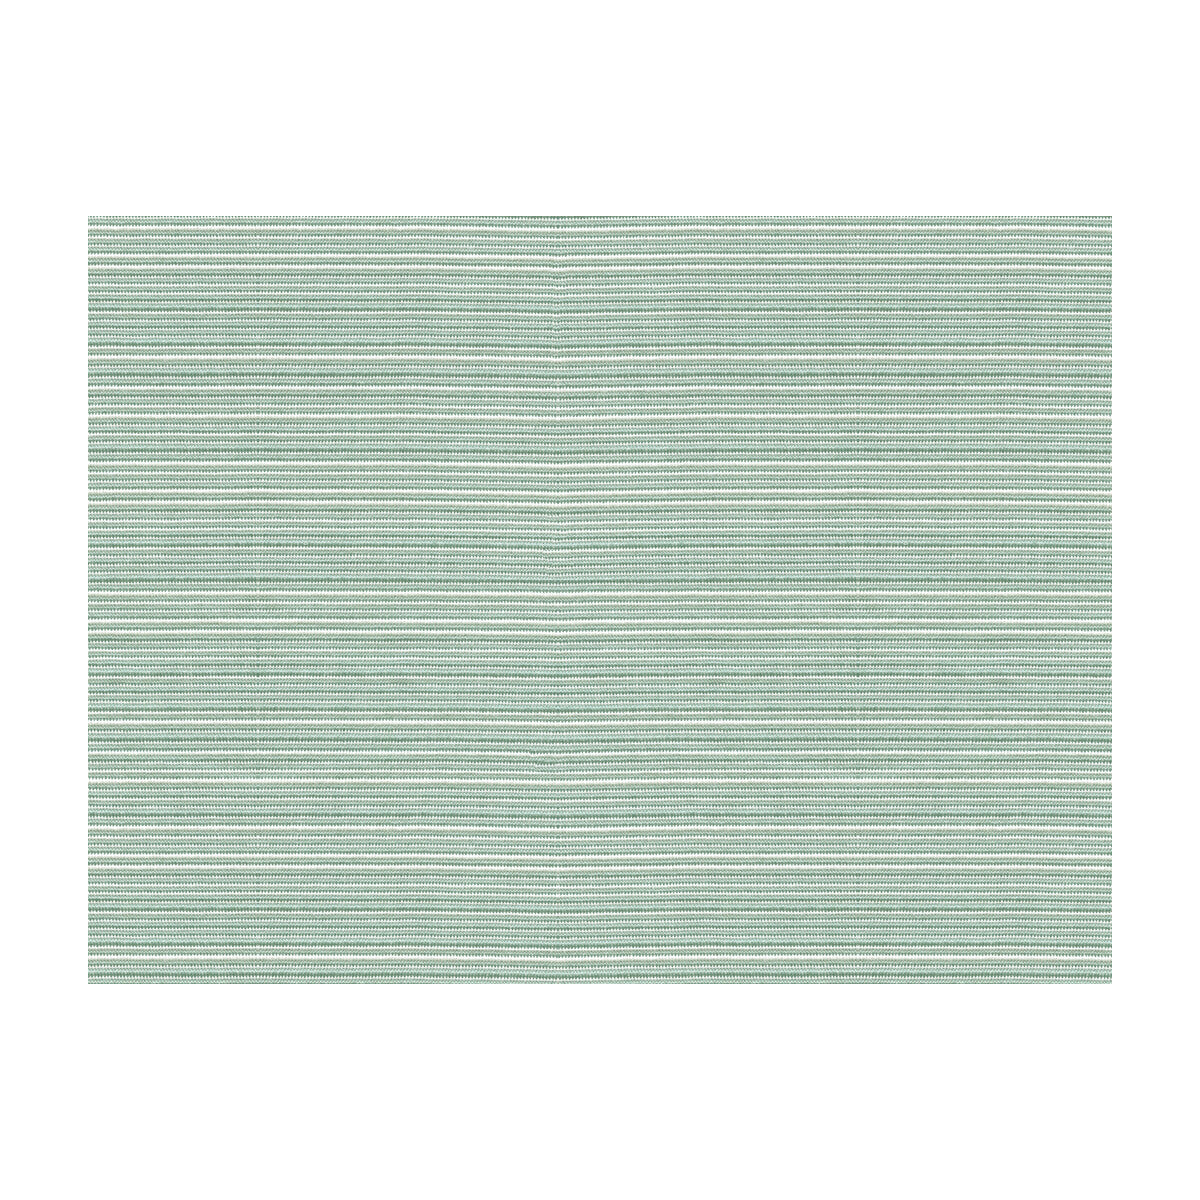 Kravet Smart fabric in 33387-35 color - pattern 33387.35.0 - by Kravet Smart in the Soleil collection